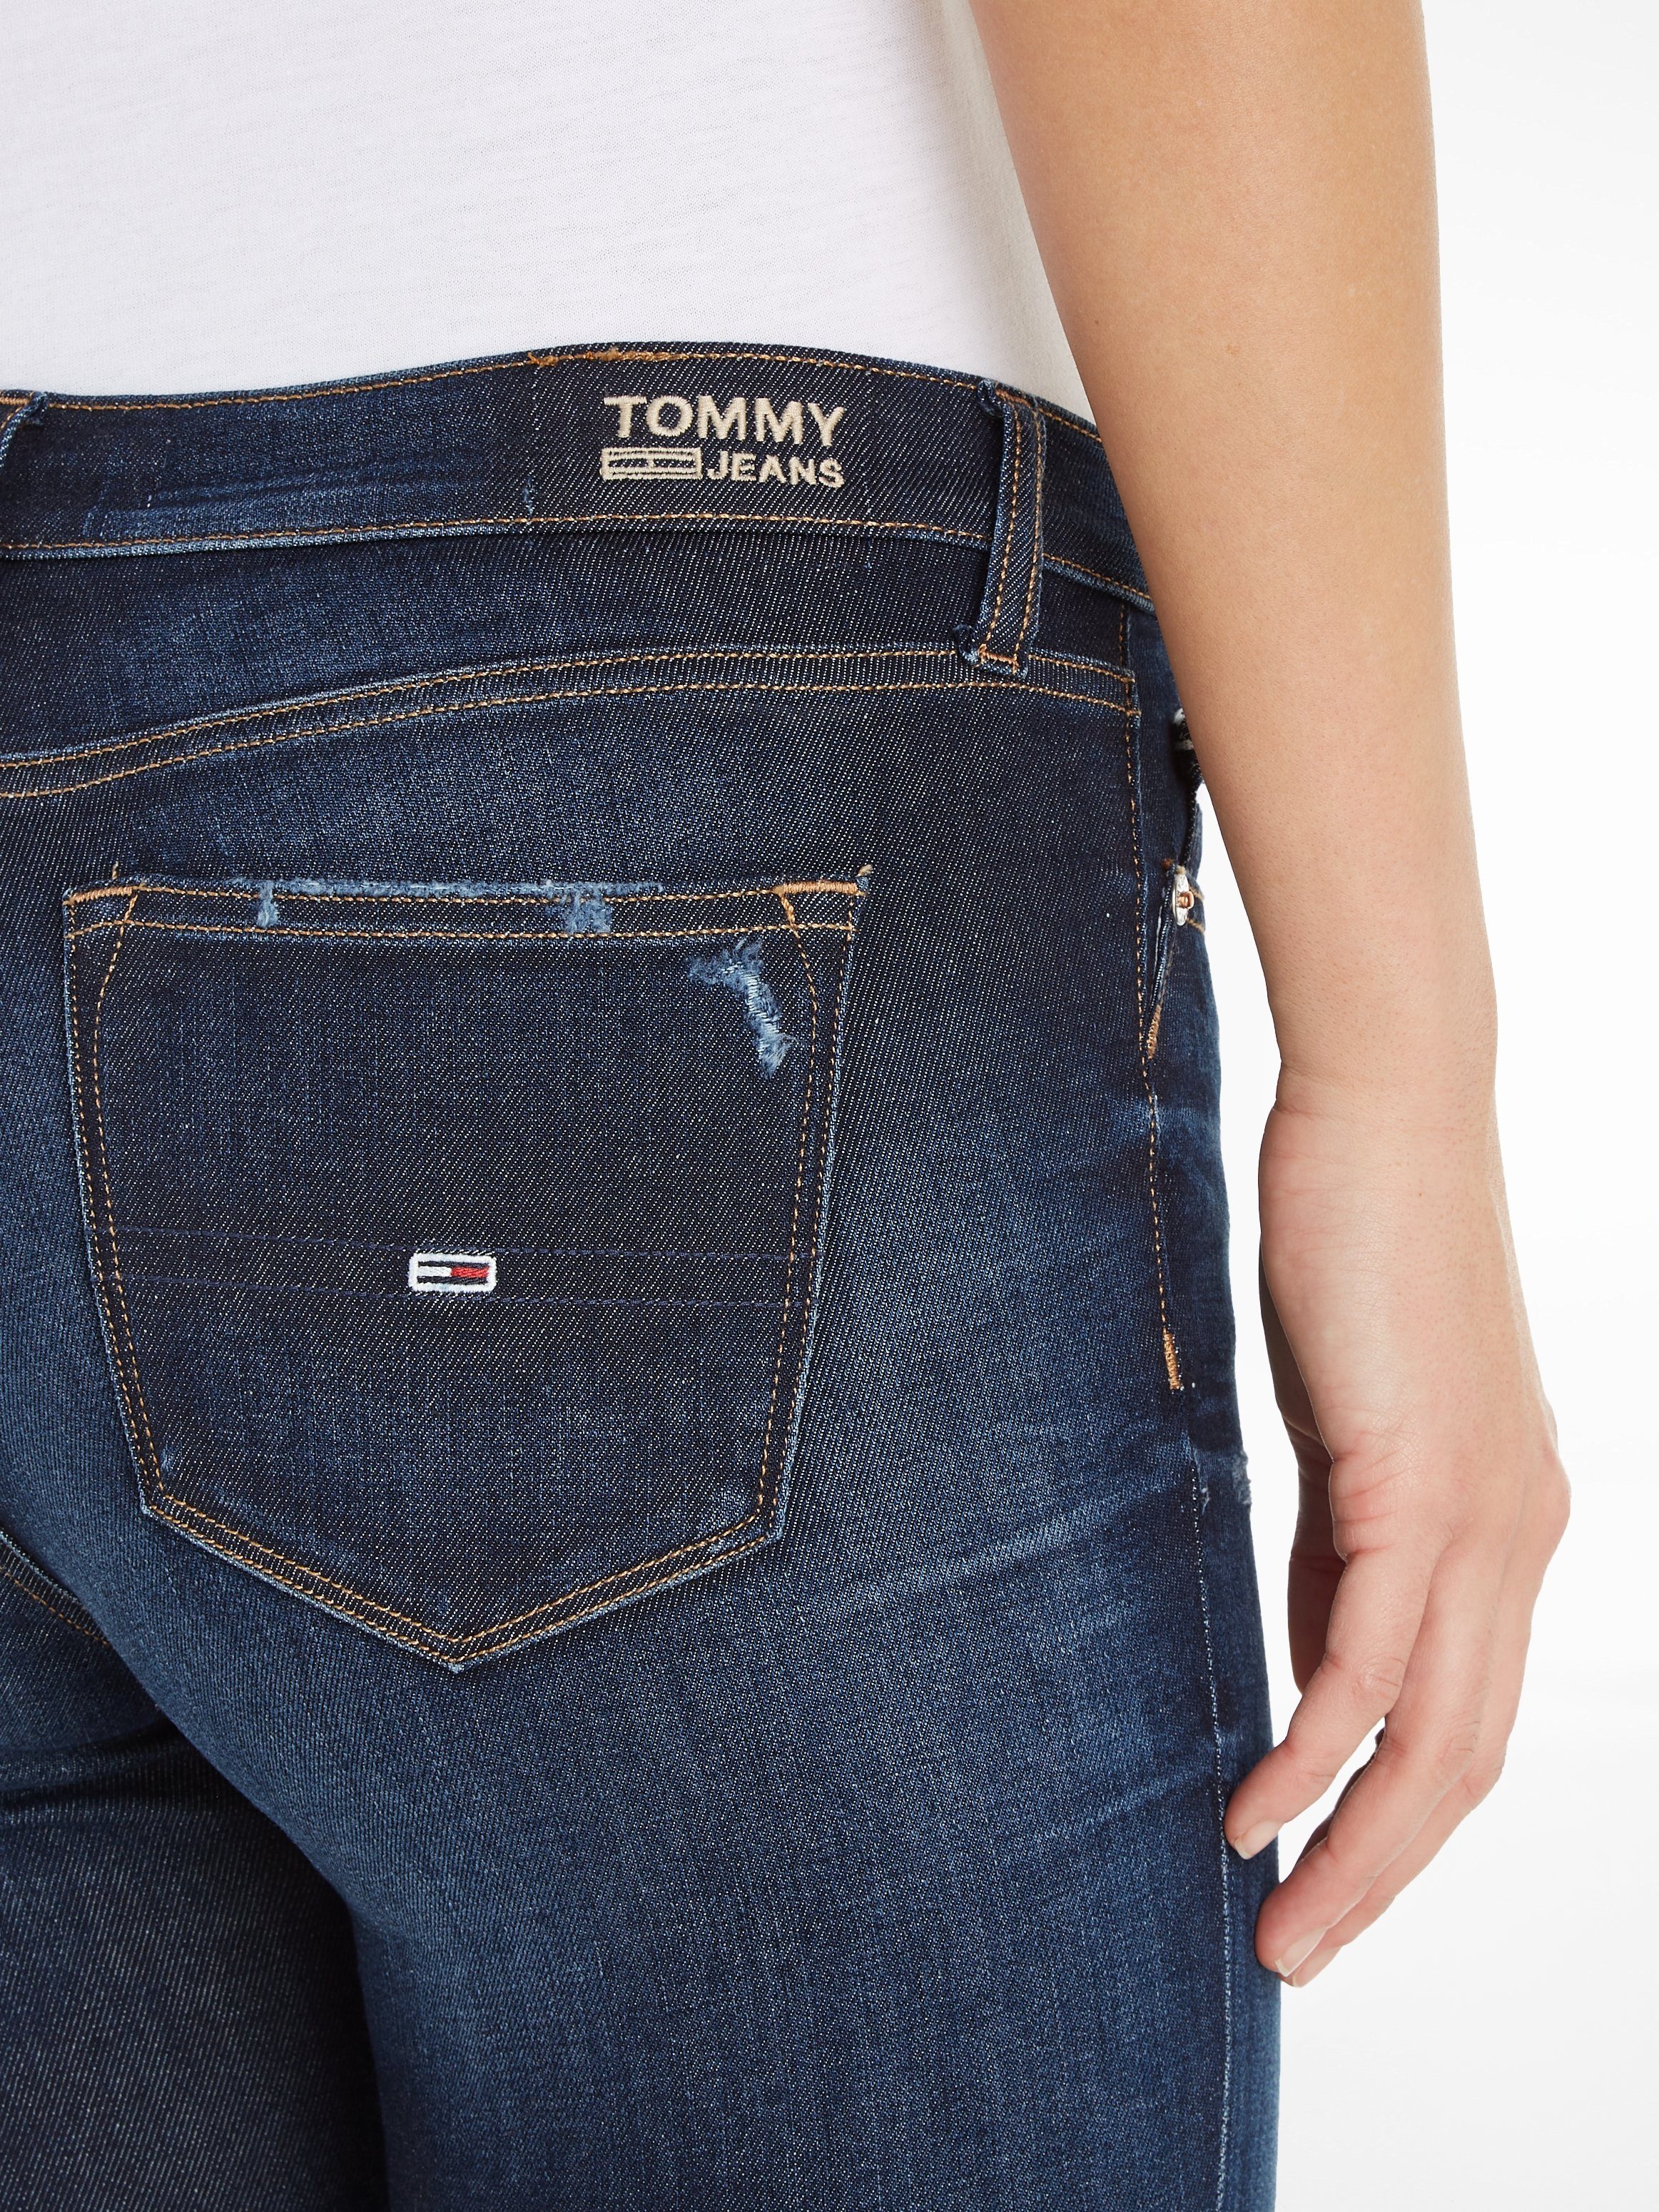 Skinny-fit-Jeans Markenlabel Tommy Tommy Jeans Denim_dark Jeans mit